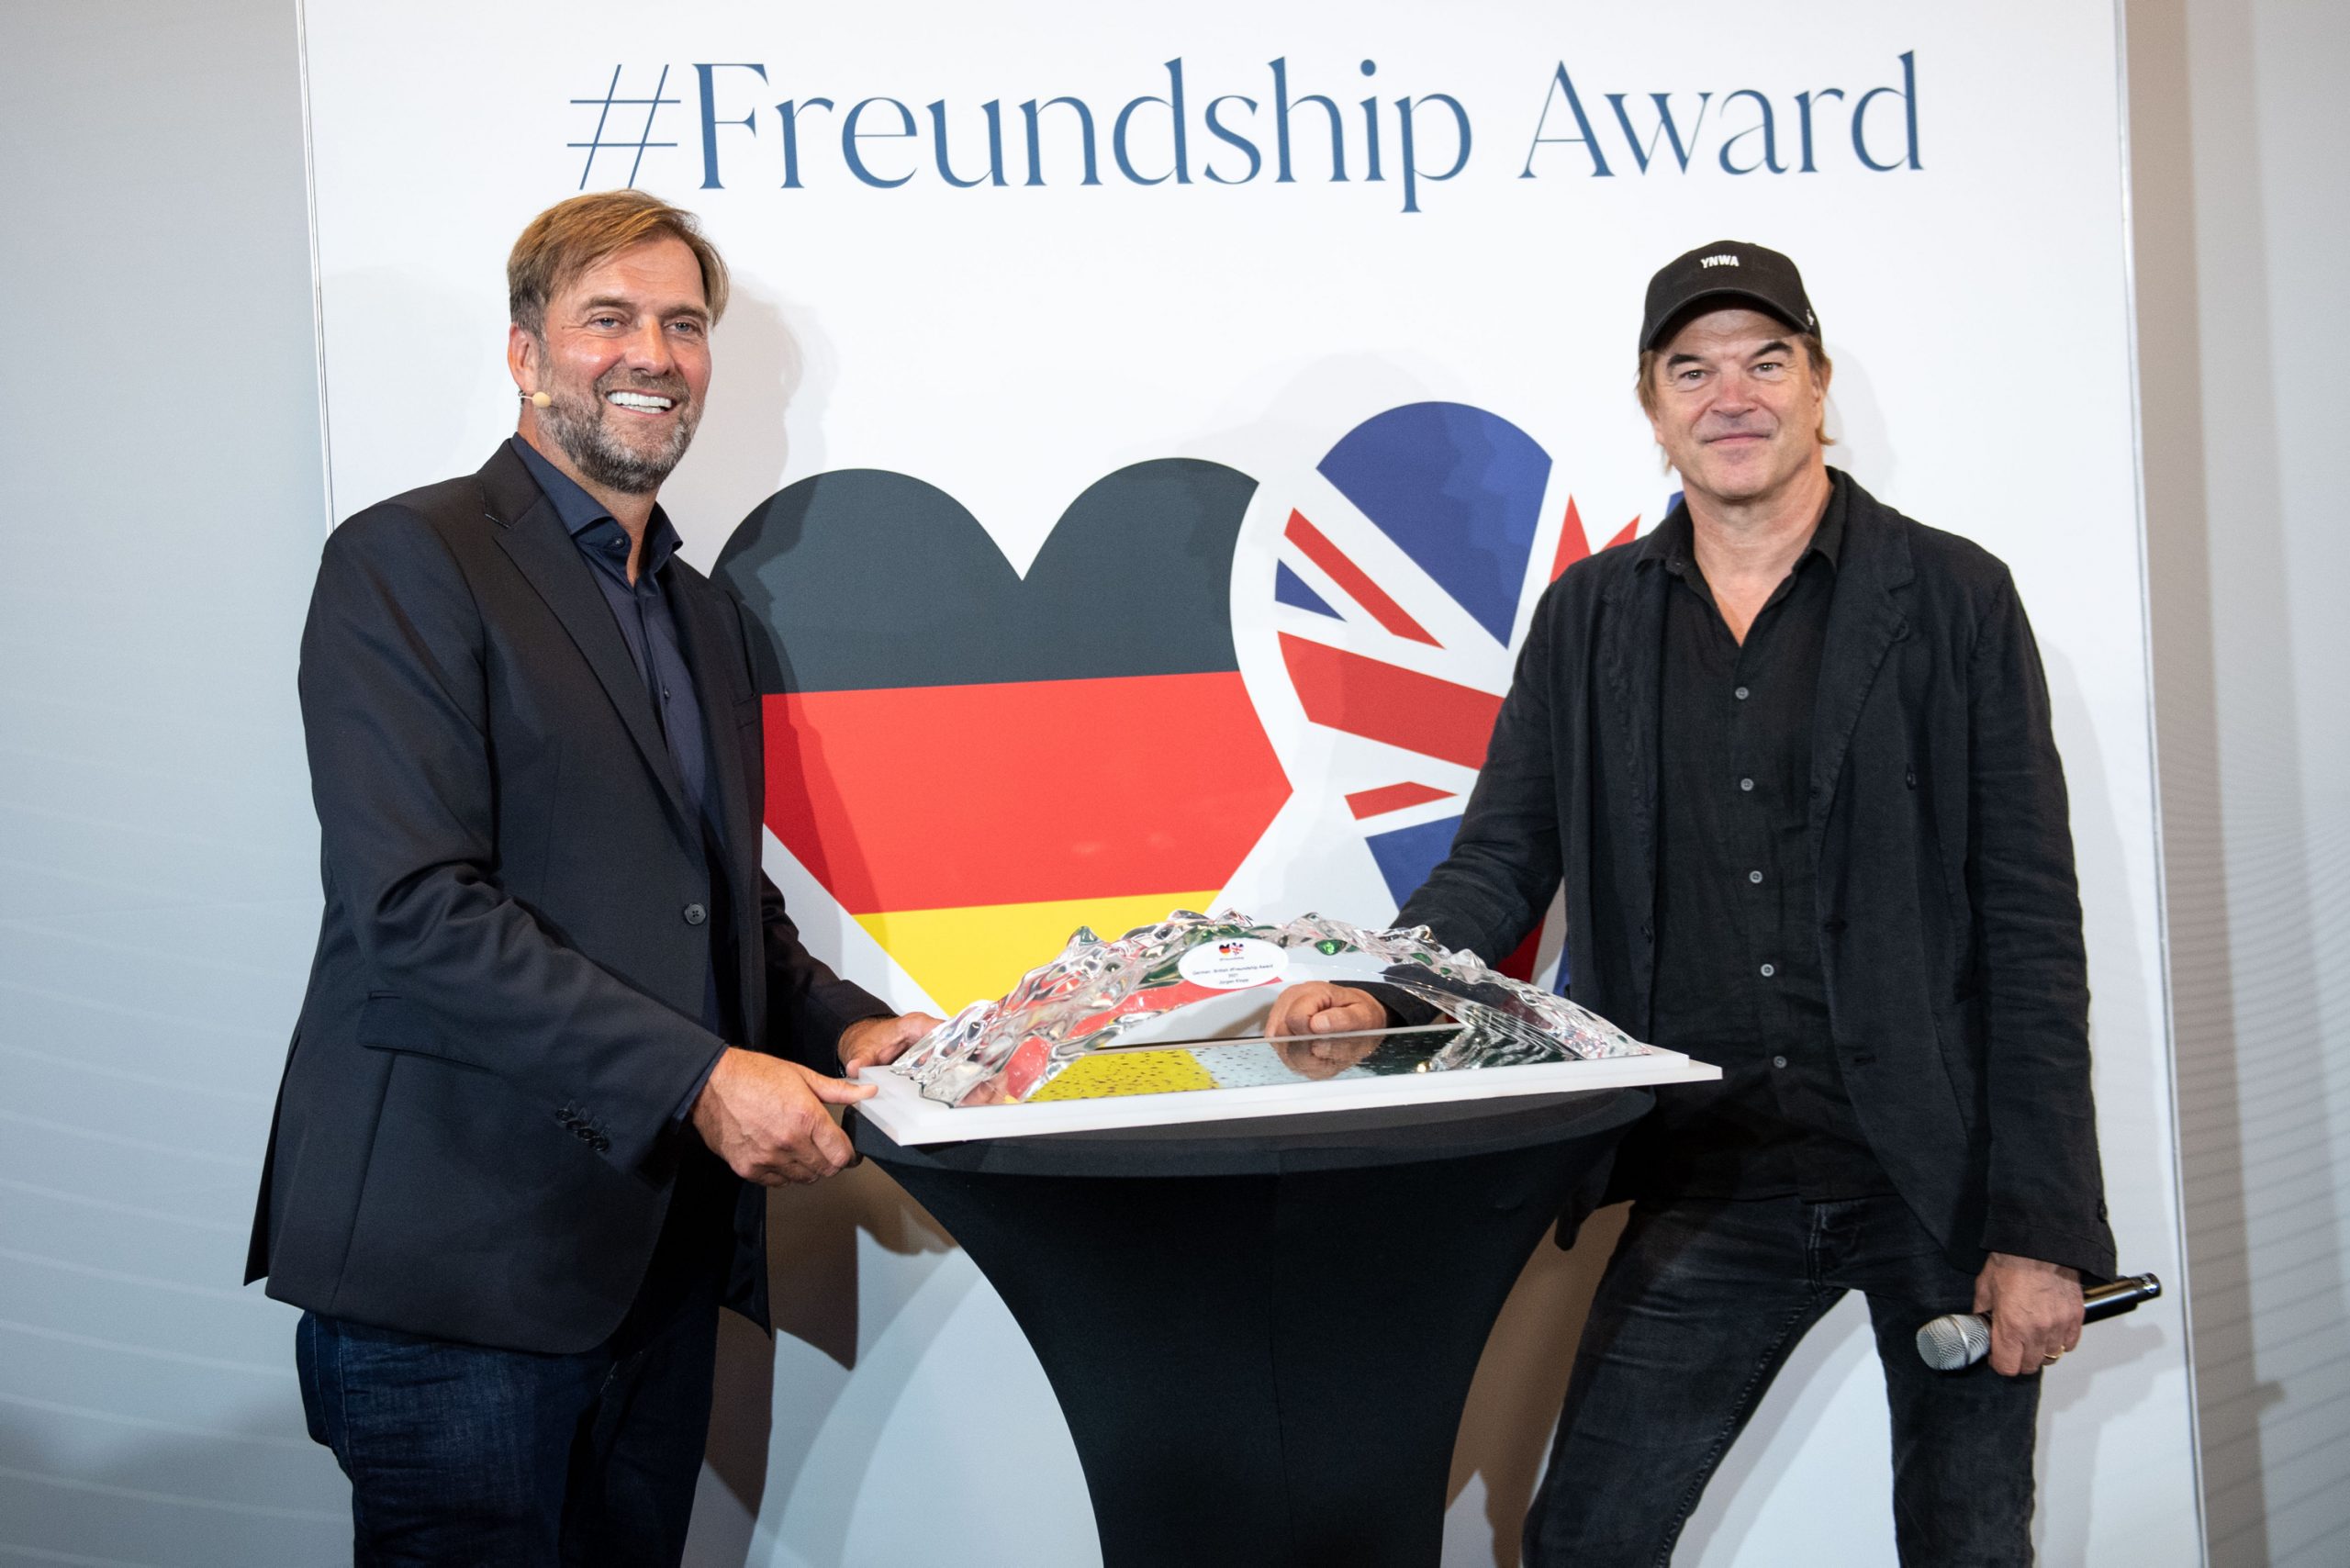 Liverpool-Coach Jürgen Klopp (l.) wurde als Preisträger des #Freundship-Awards ernannt